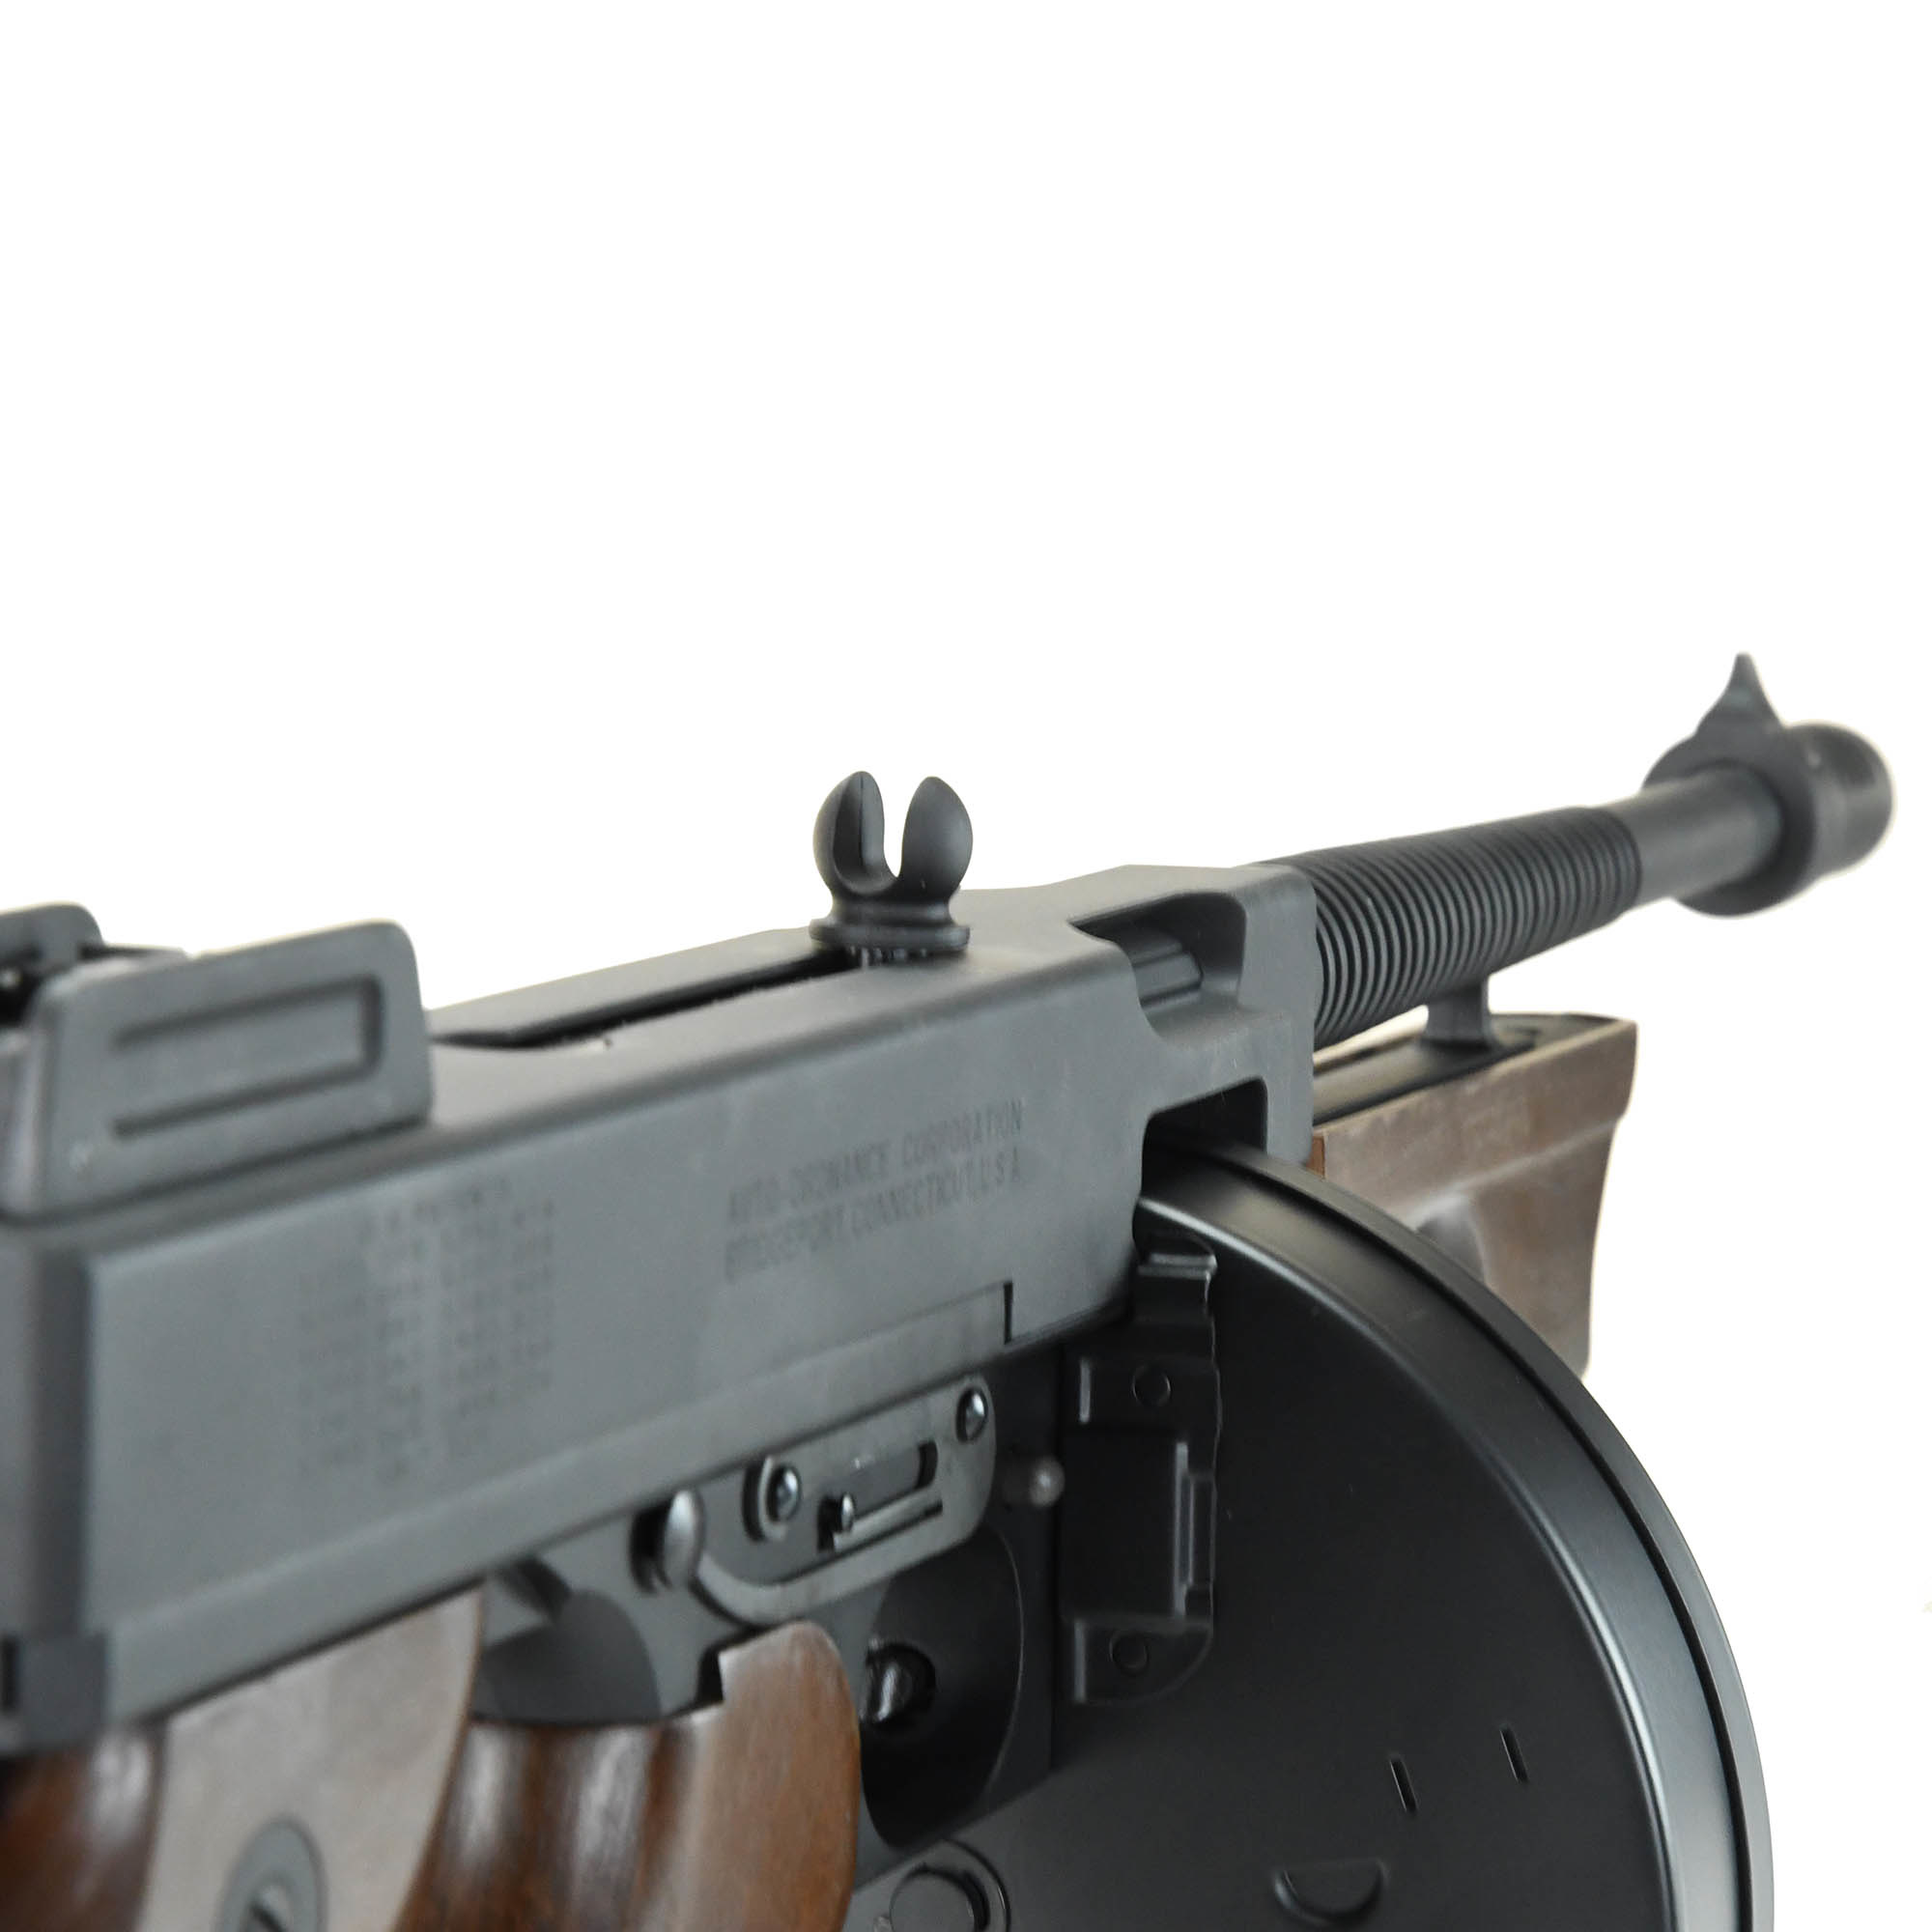 King Arms Thompson M1928 AEG  1.49 Joule - Echtholz